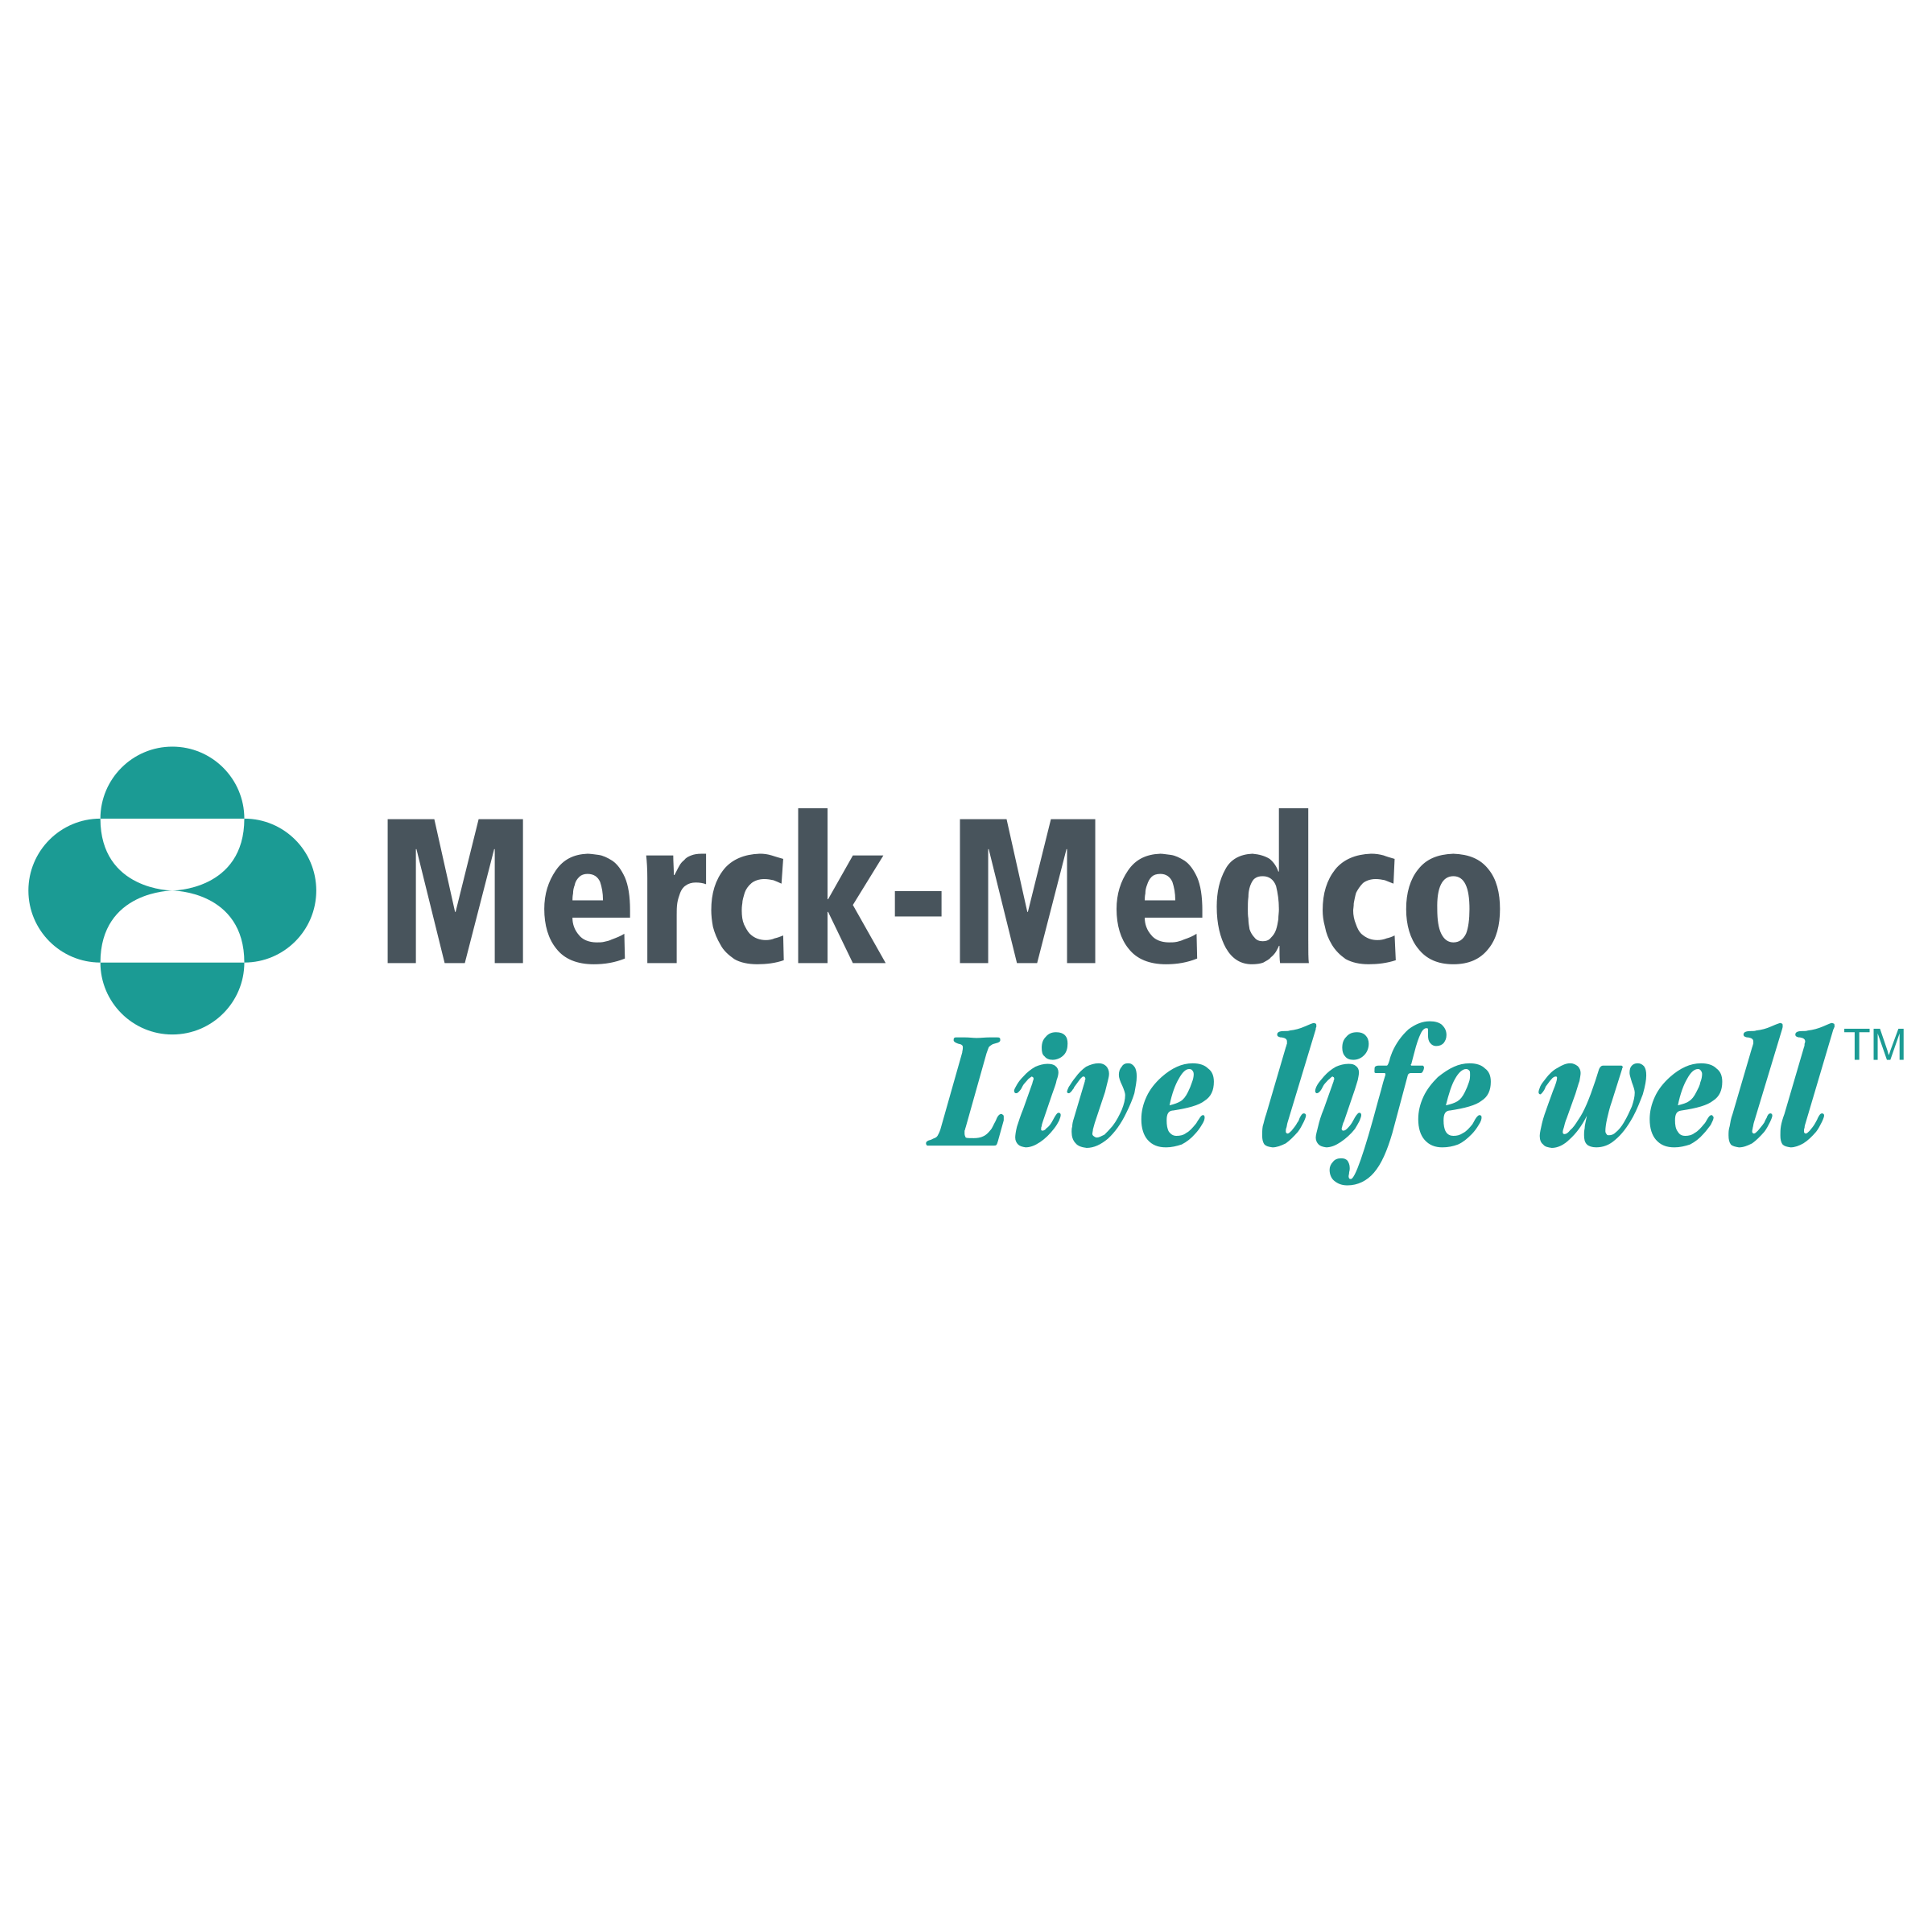 Medco Supply Logo - Merck Medco Logo PNG Transparent & SVG Vector - Freebie Supply